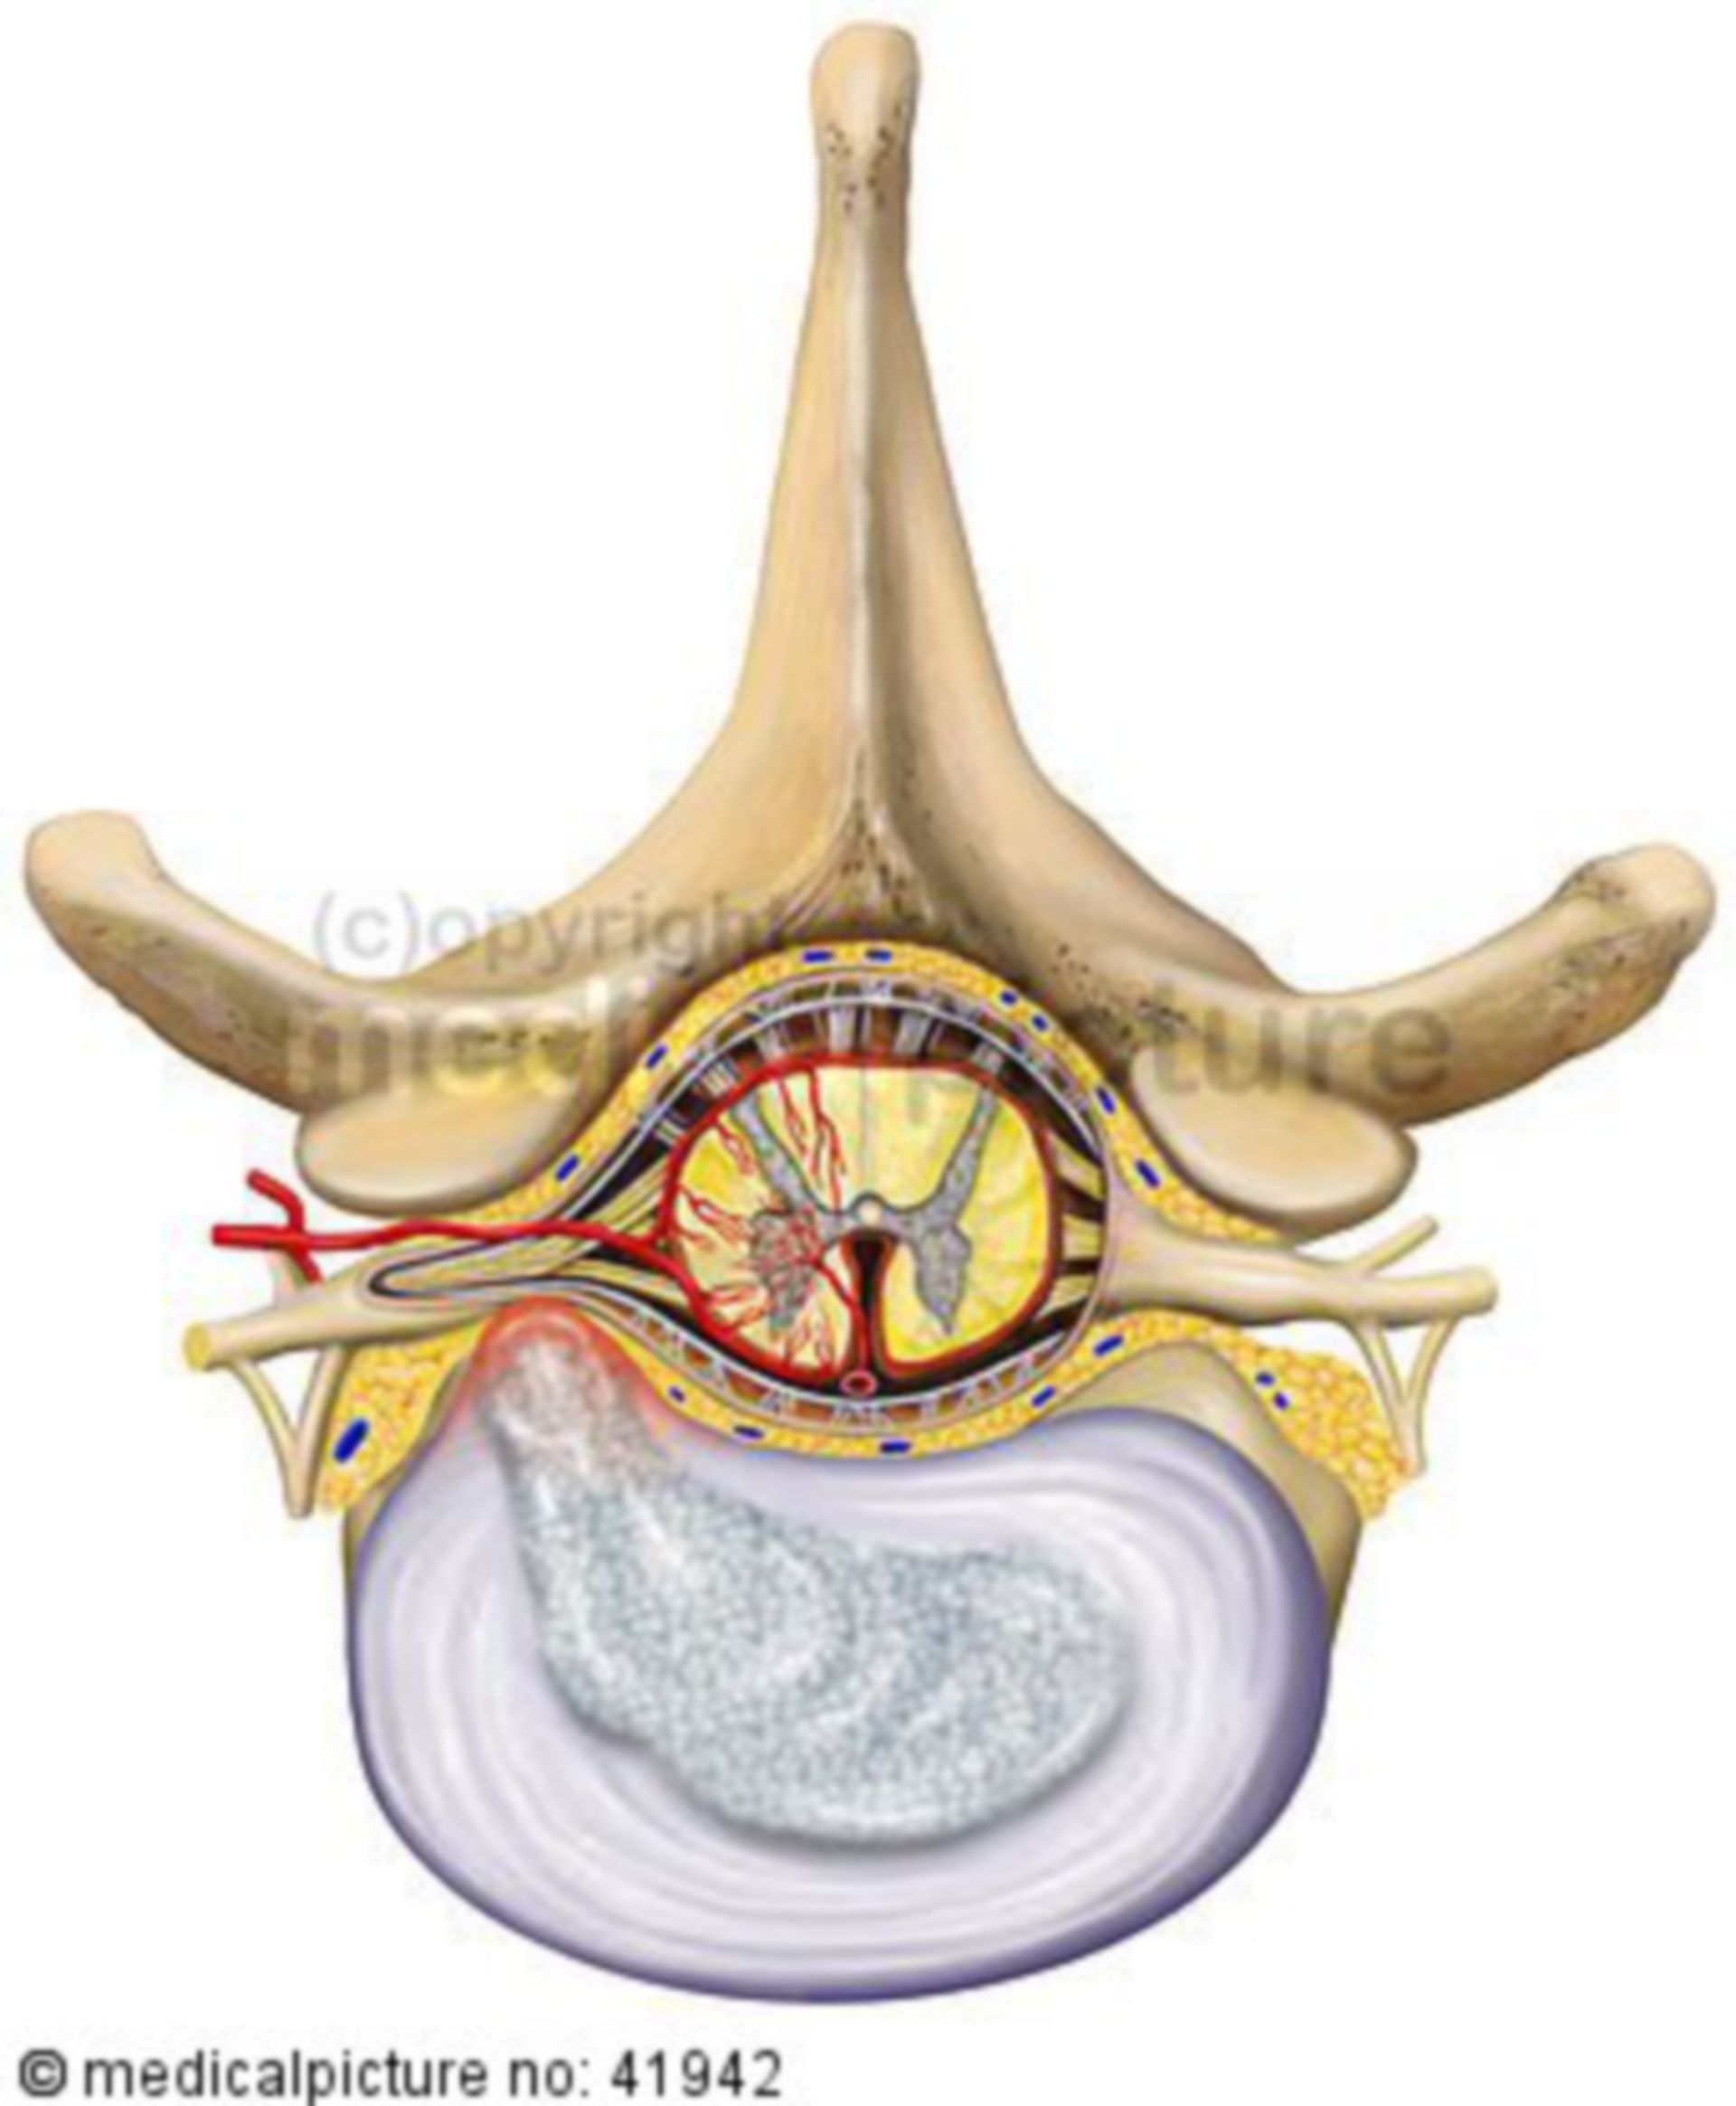 Bandscheibenvorfall, Prolaps, herniated vertebral disc